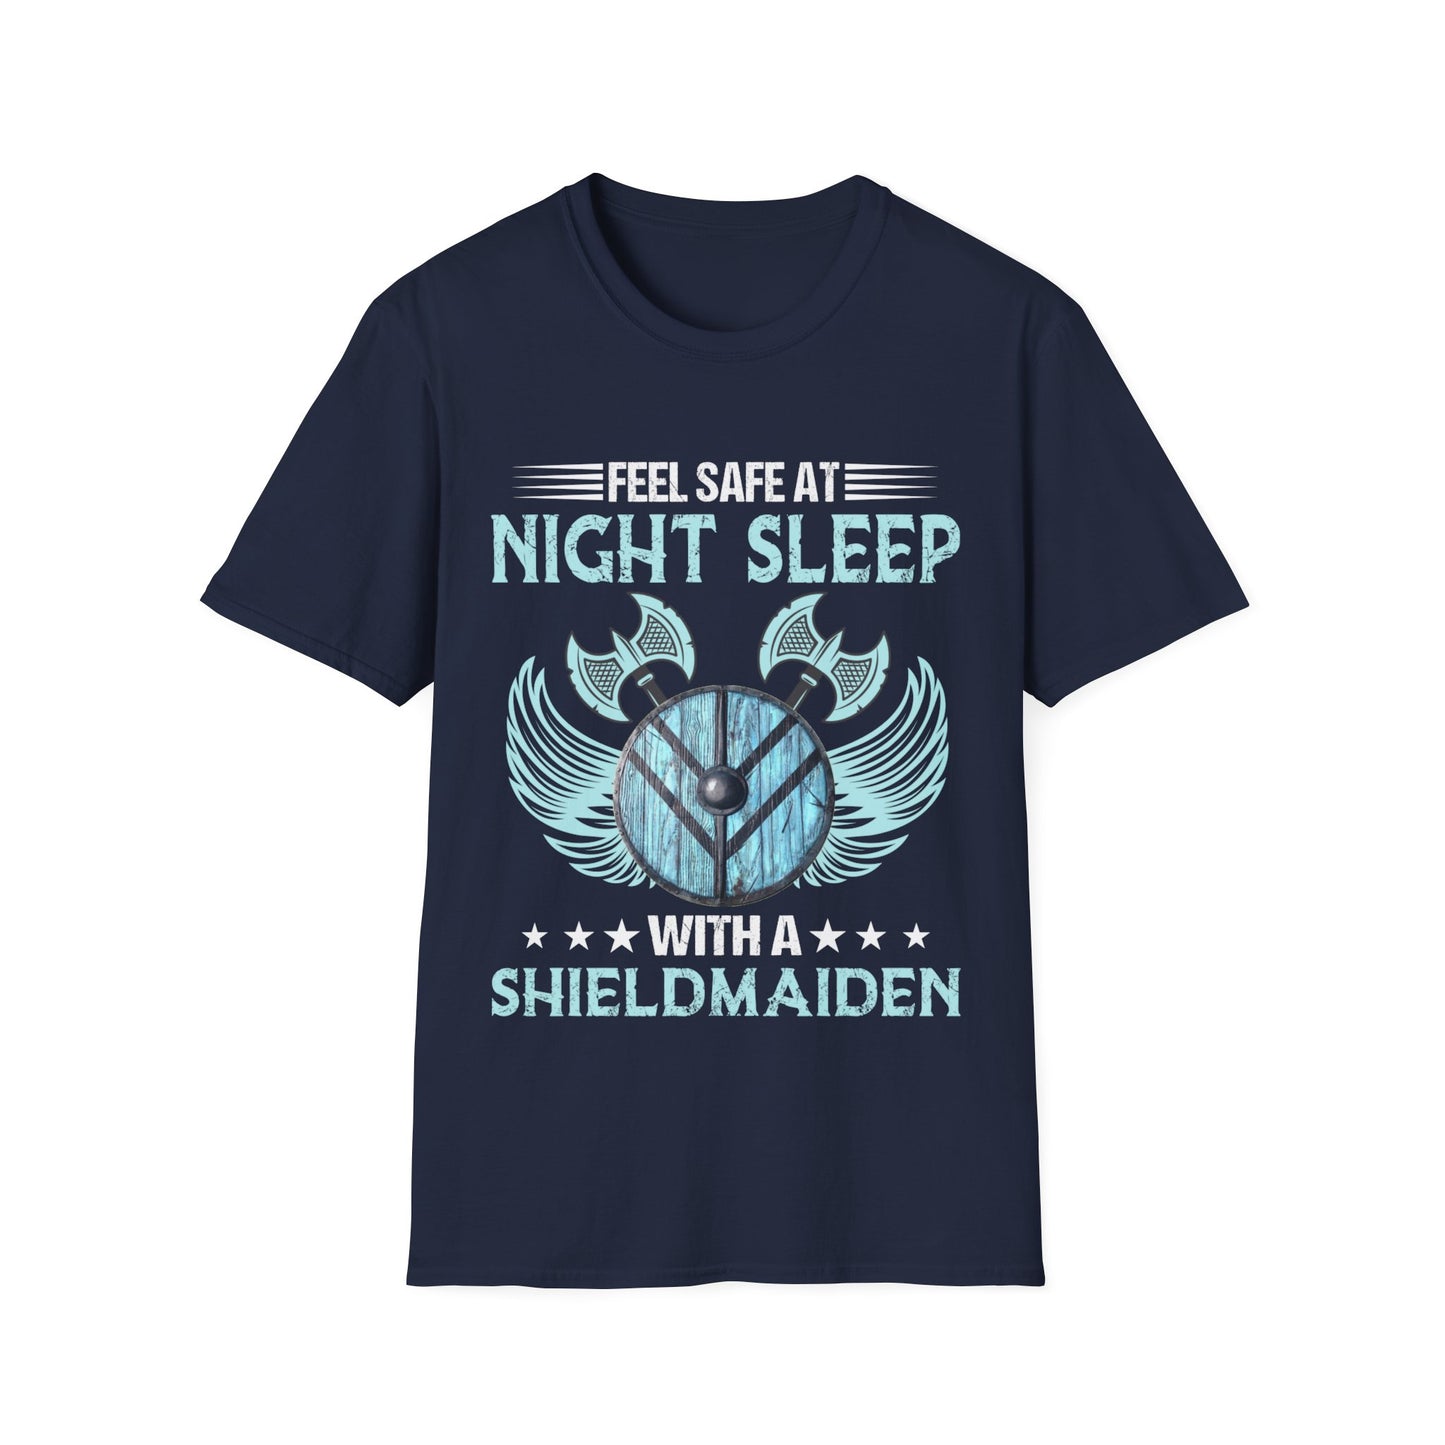 Feel Safe At Night Sleep With A Shieldmaiden T-Shirt